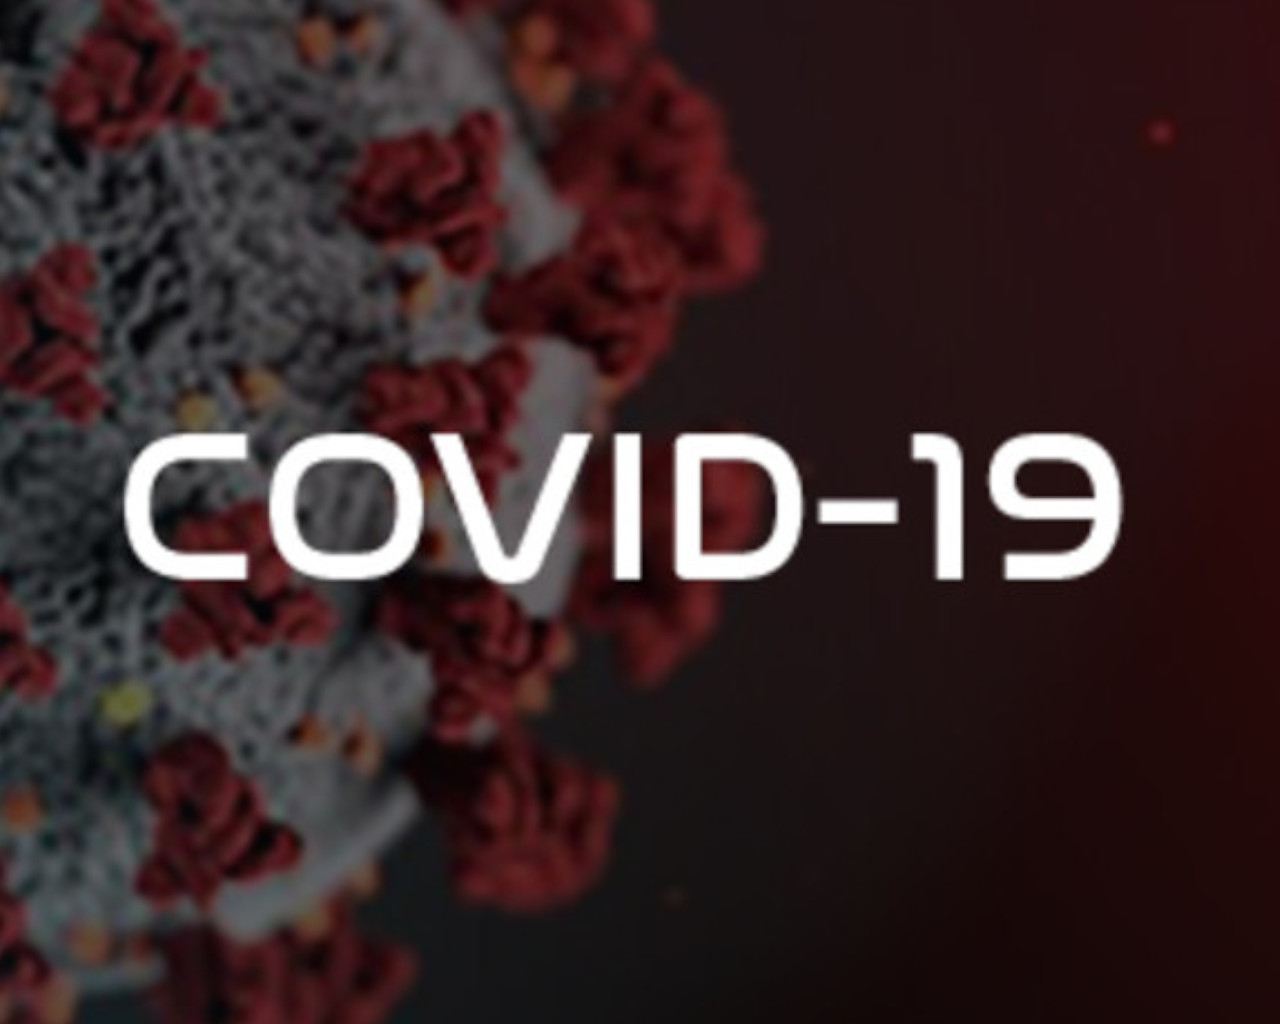 covid-19 εμβόλιο, covid-19 αντιμετώπιση, covid-19 προστασία, covdi-19 φάρμακο, covid-19 Ελλάδα, covid-19 εξάπλωση